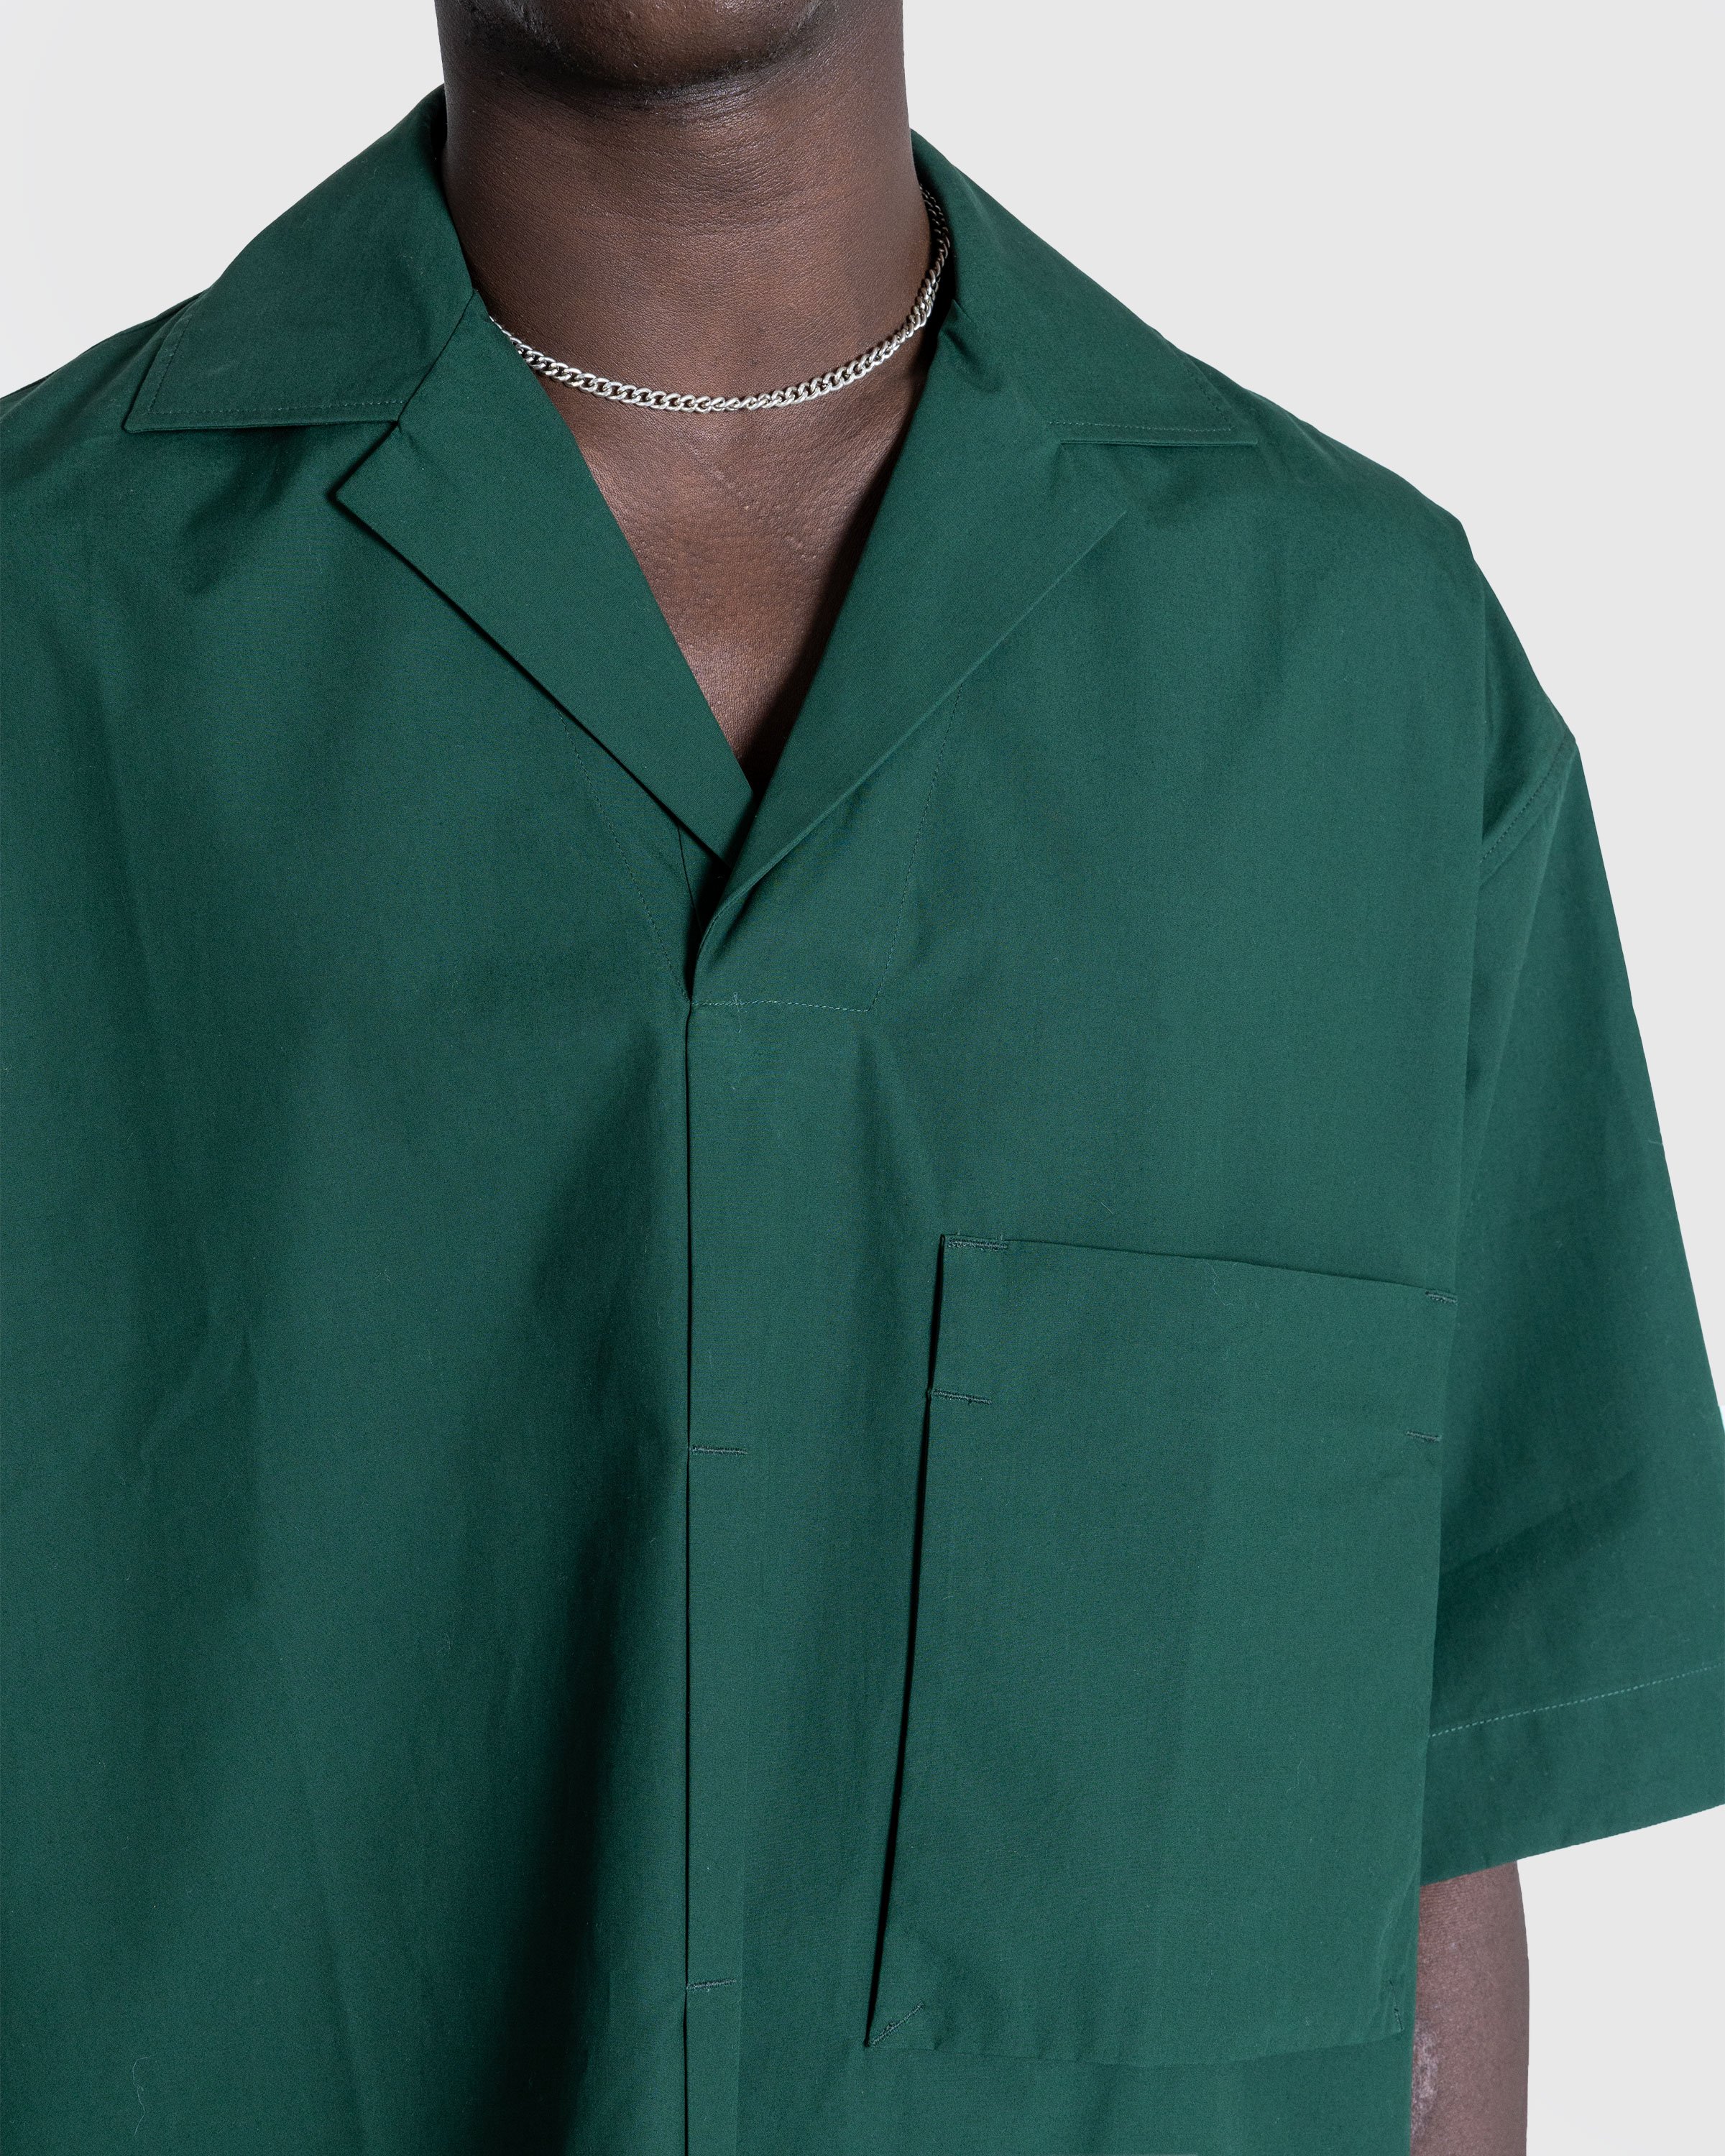 JACQUEMUS - LE HAUT POLO - Clothing - Green - Image 5